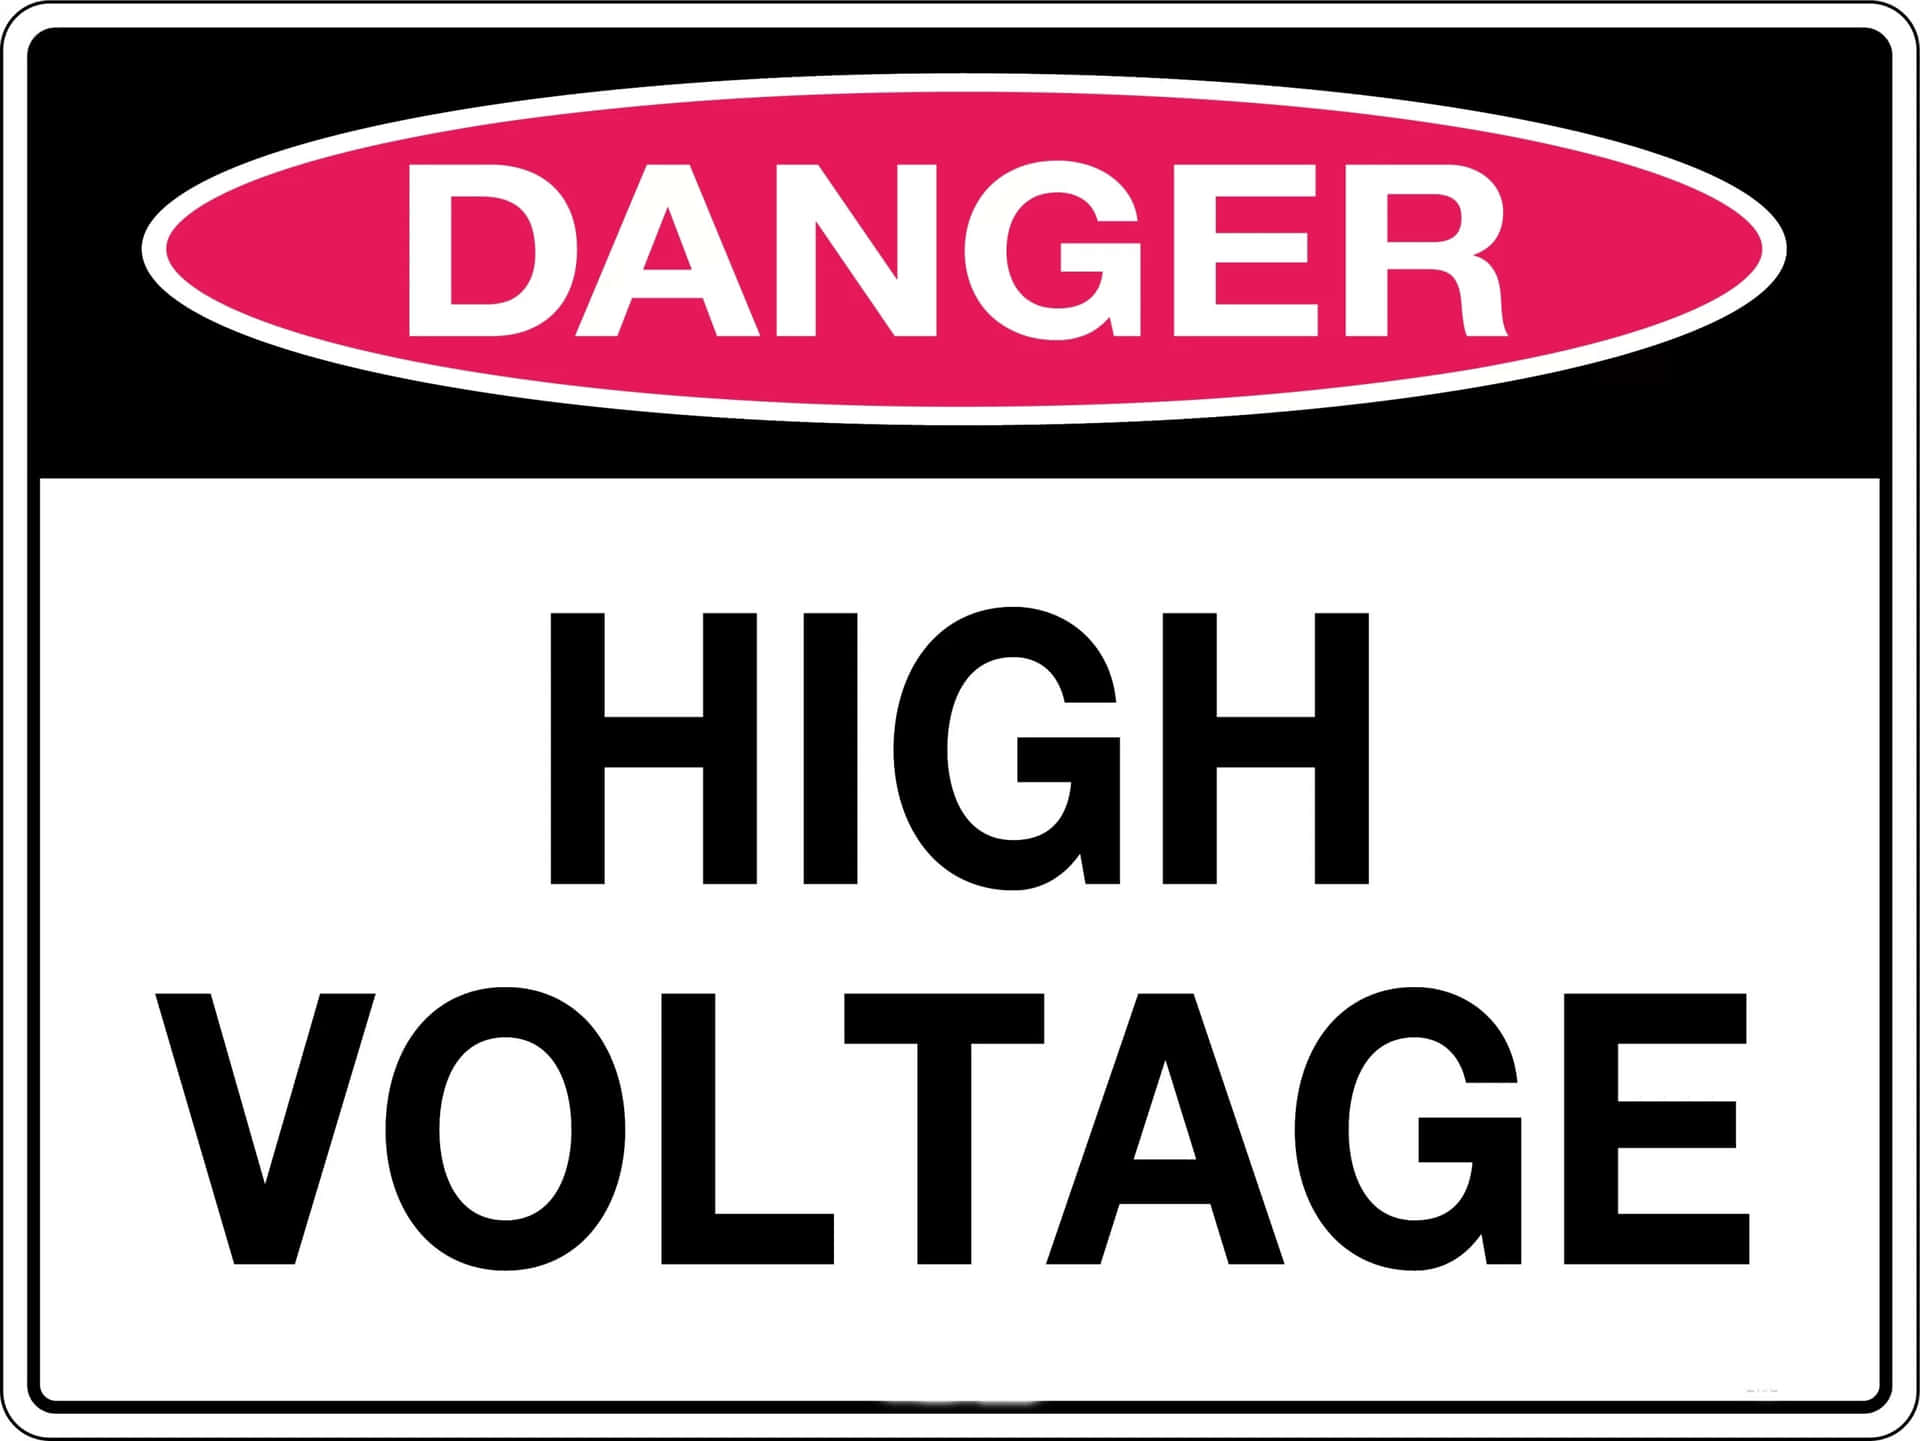 Danger High Voltage Warning Picture